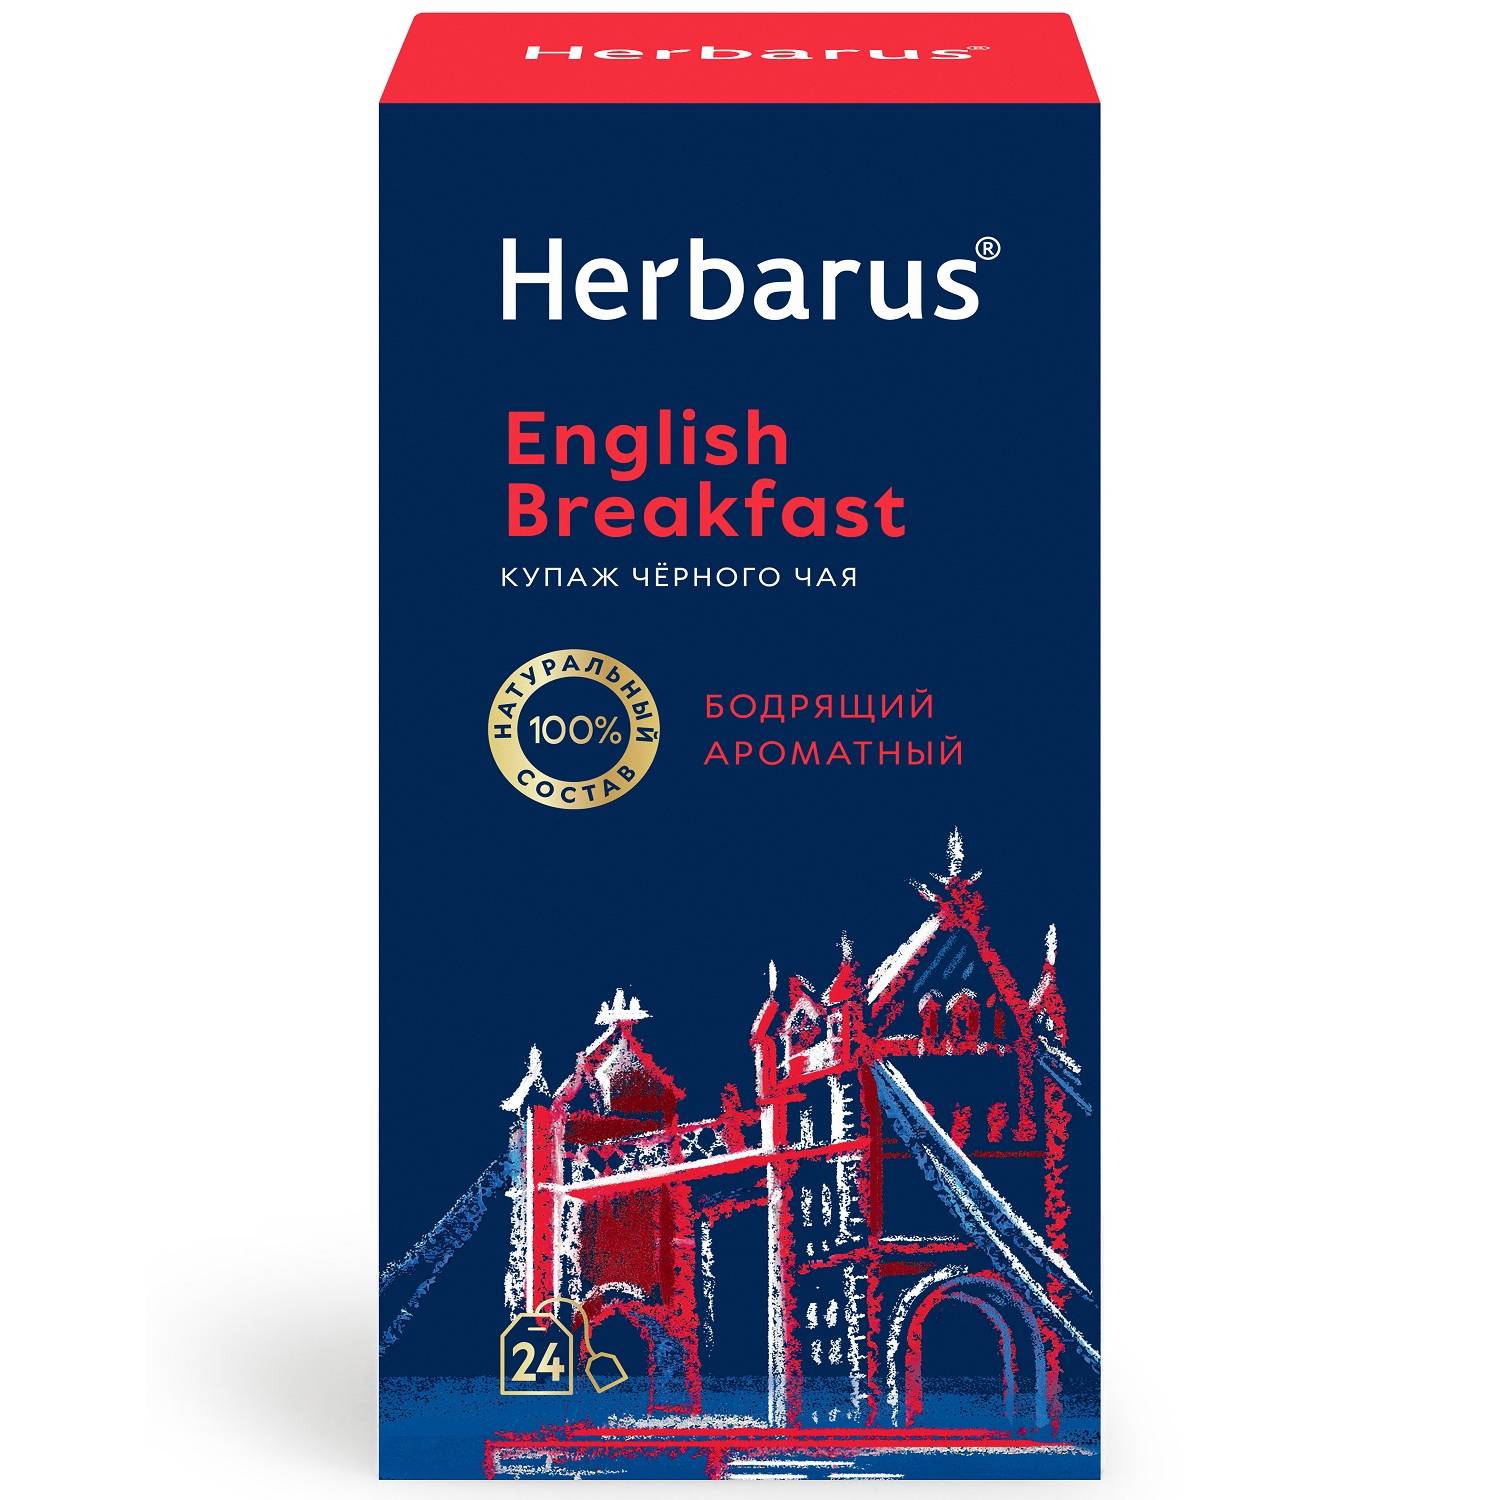 Herbarus Купаж черного чая English Breakfast, 24 пакетика х 2 г (Herbarus, Классический чай) чай herbarus черный с добавками дикий терпкий 24 пакетика